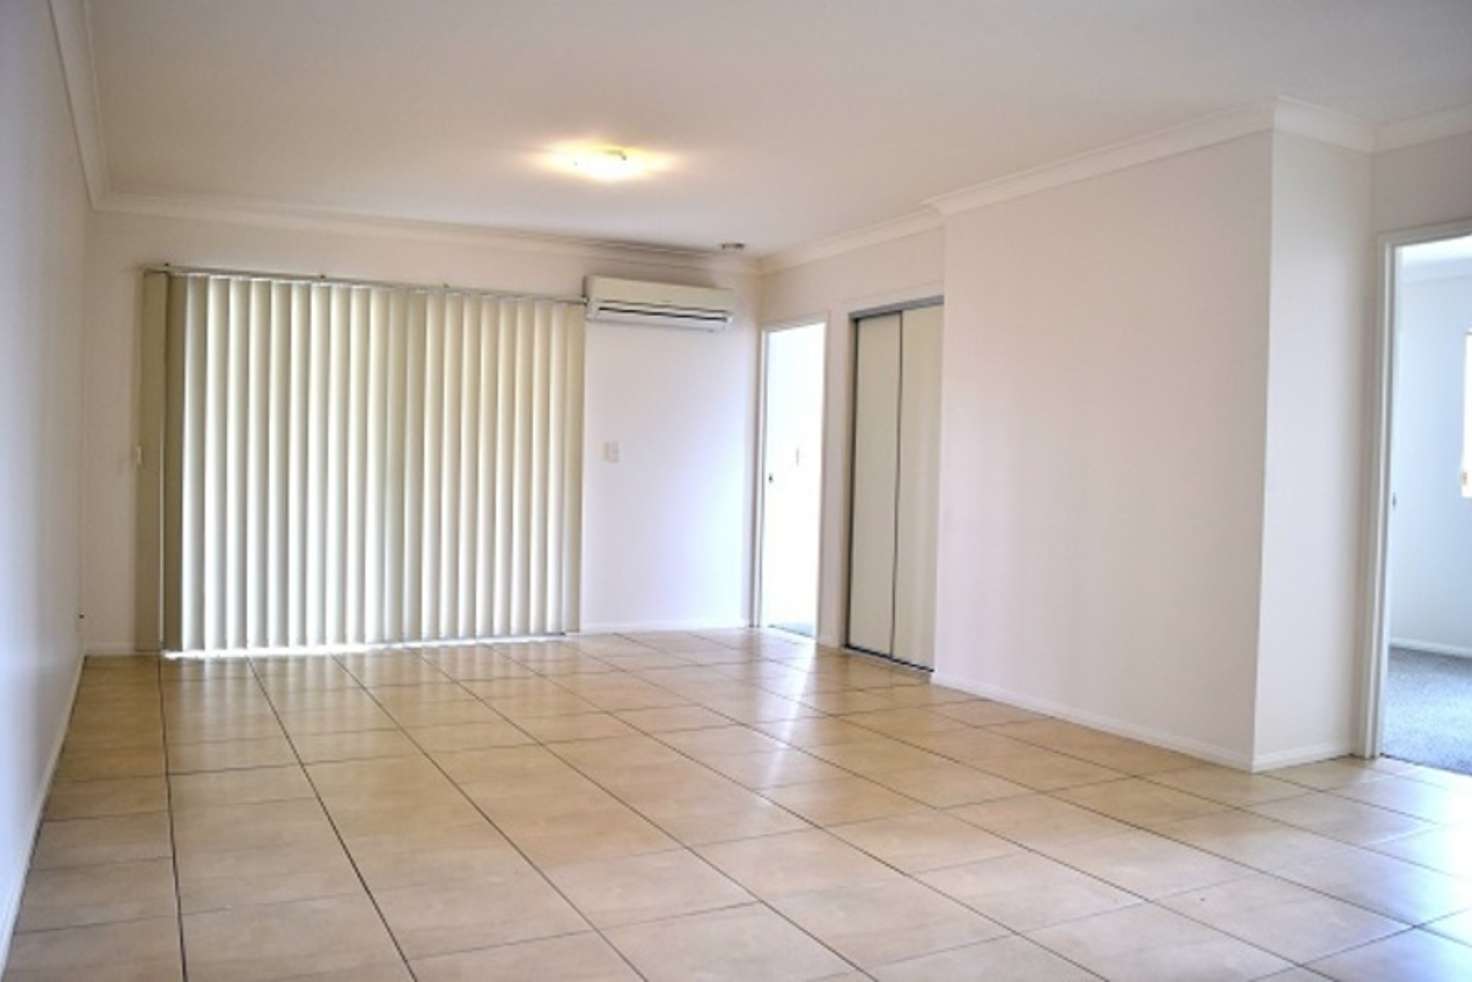 Main view of Homely apartment listing, 22 Keats St, Moorooka QLD 4105